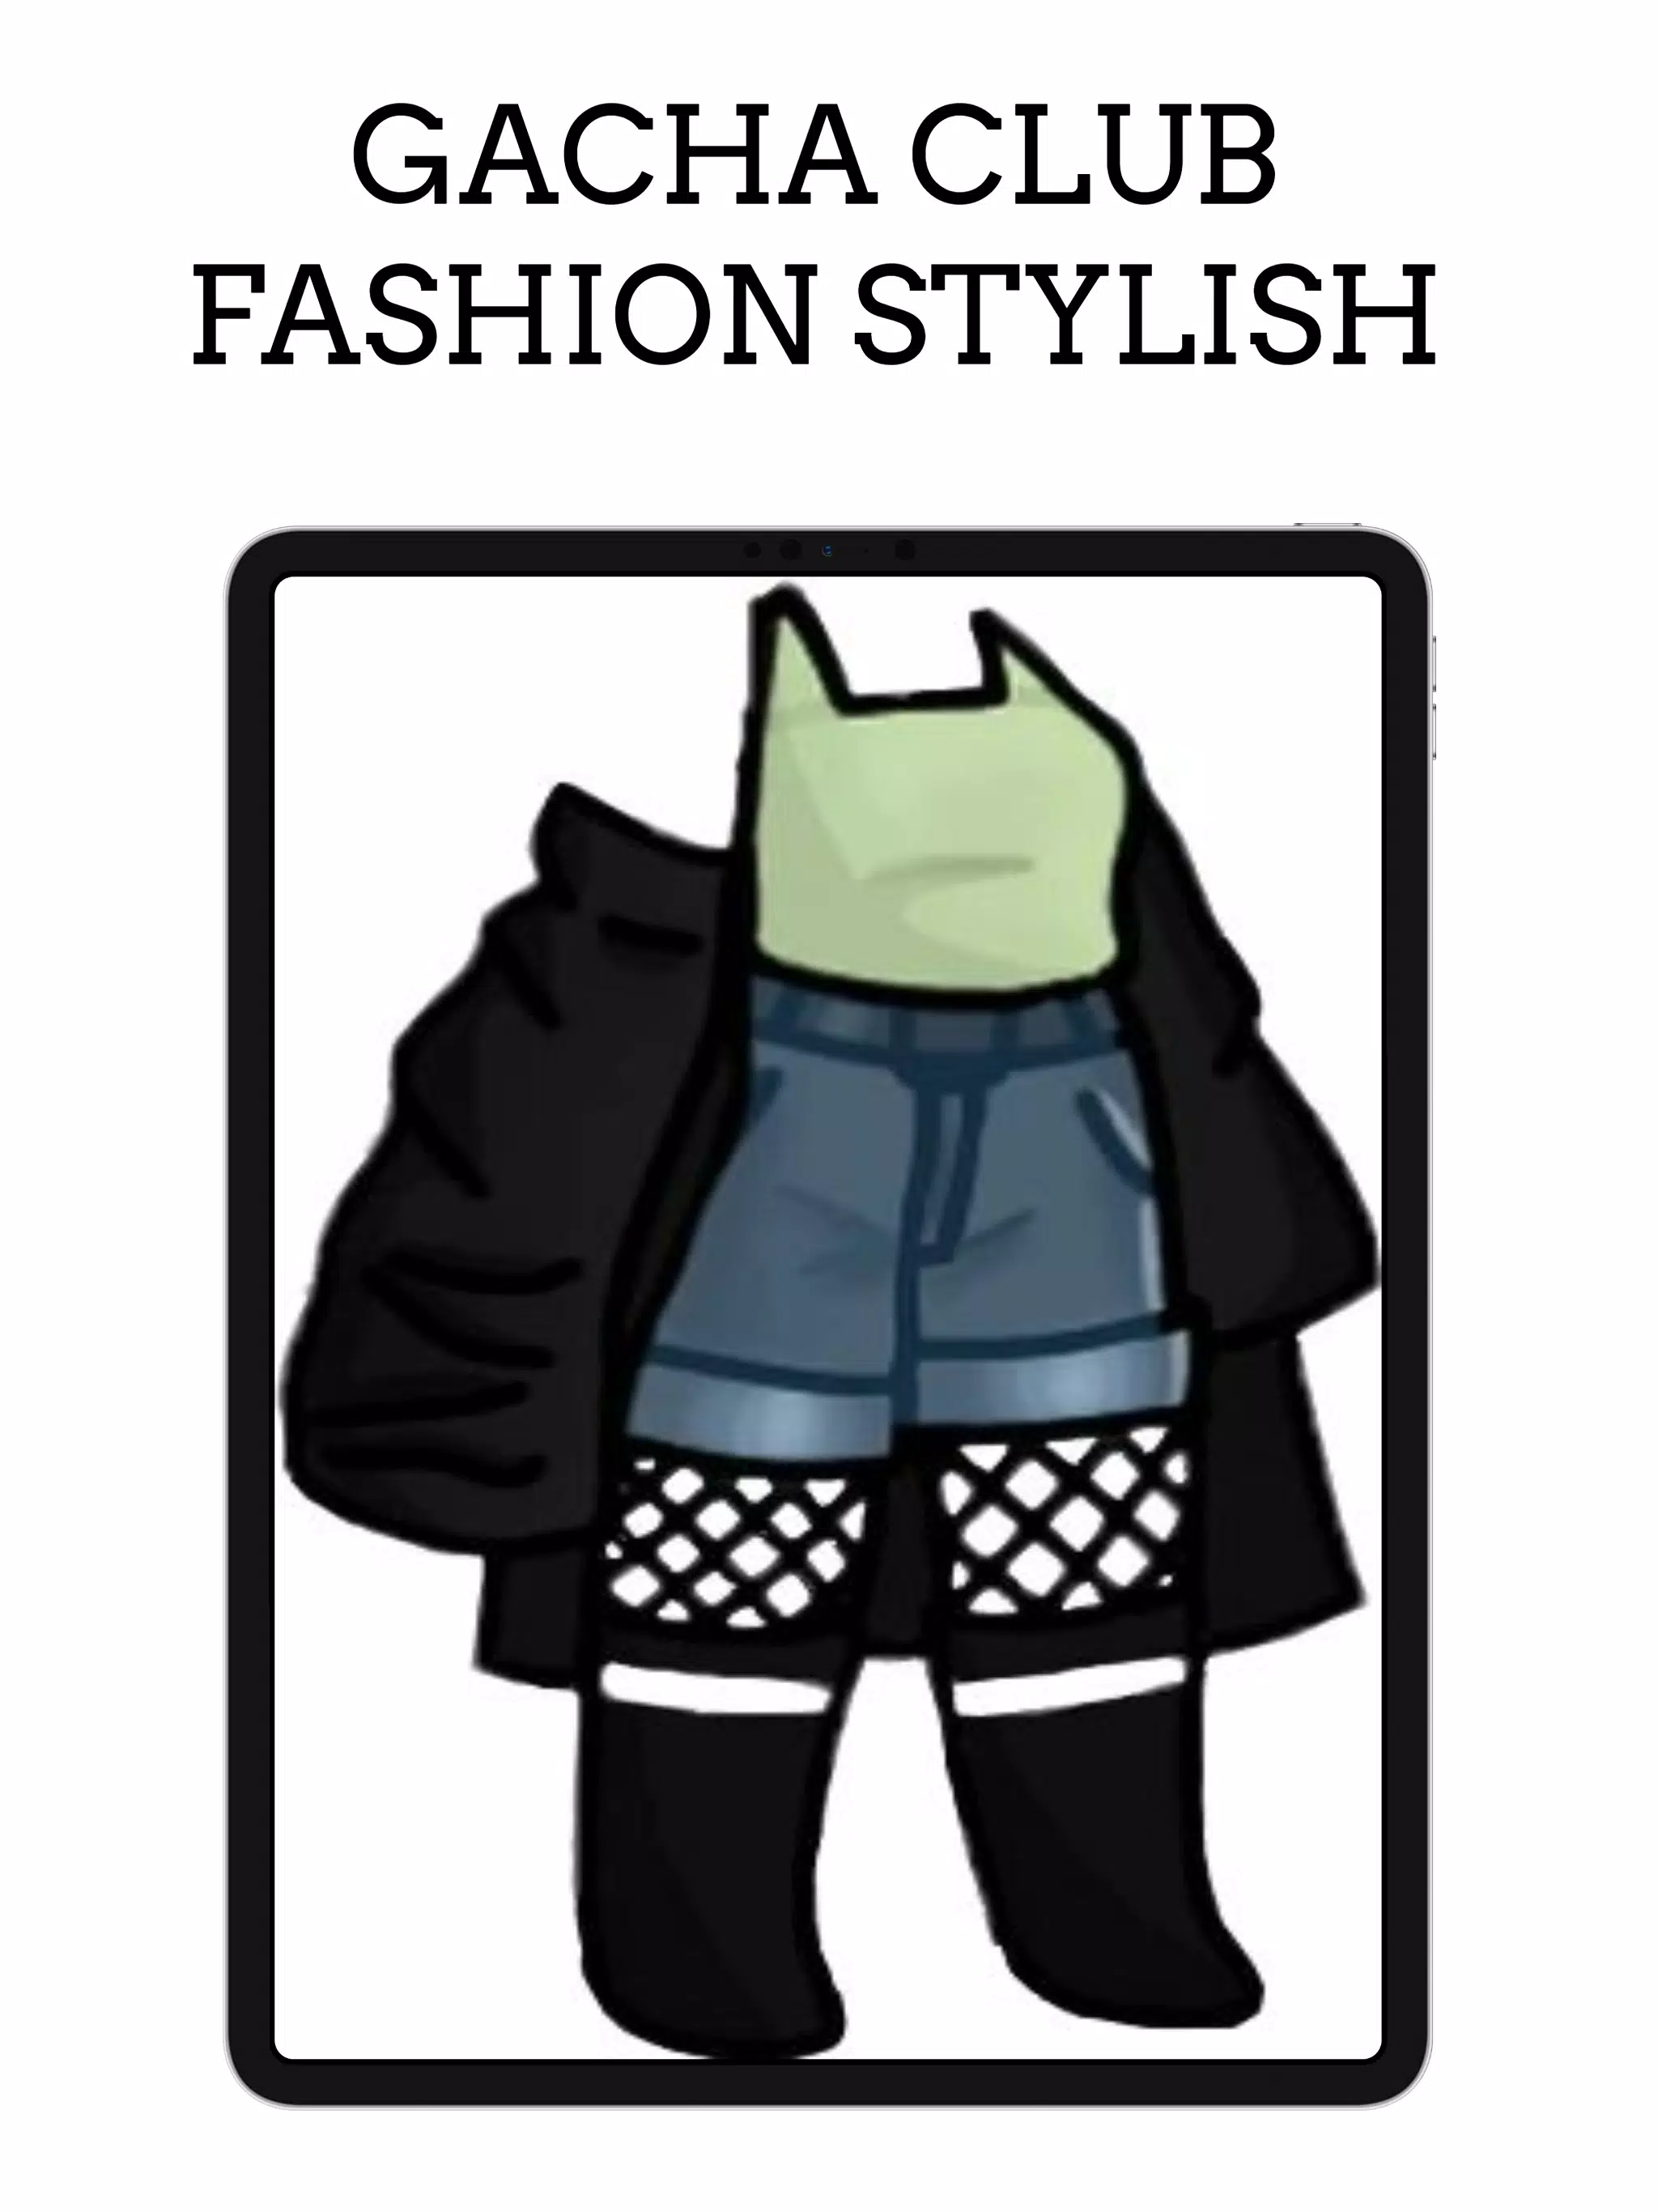 Gacha Club Fashion Stylish APK (Android App) - Free Download